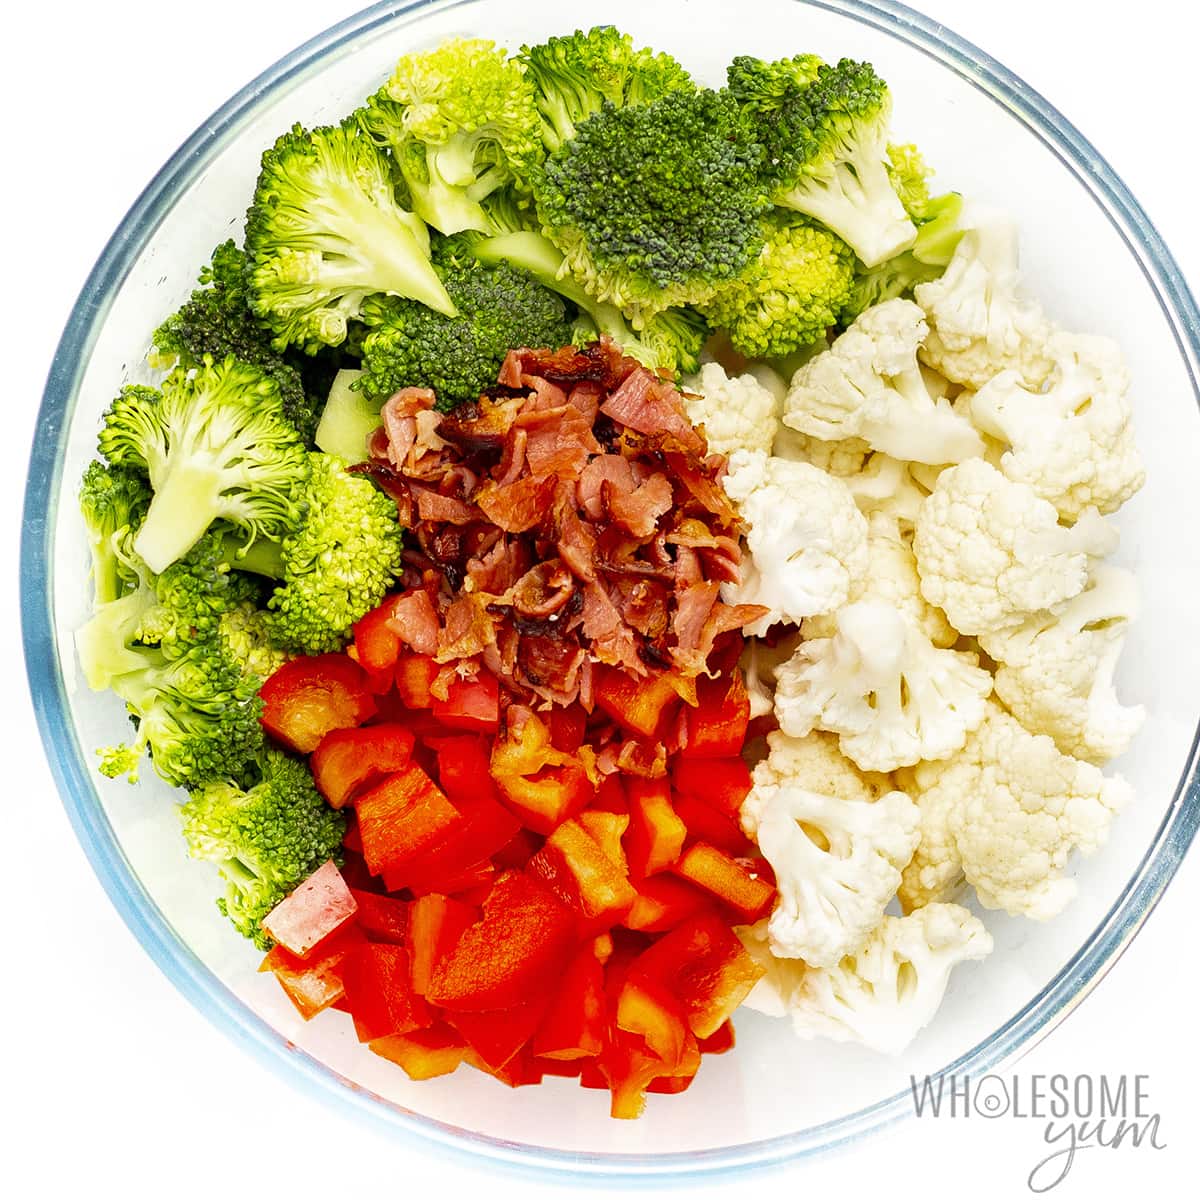 Salad ingredients in a bowl.